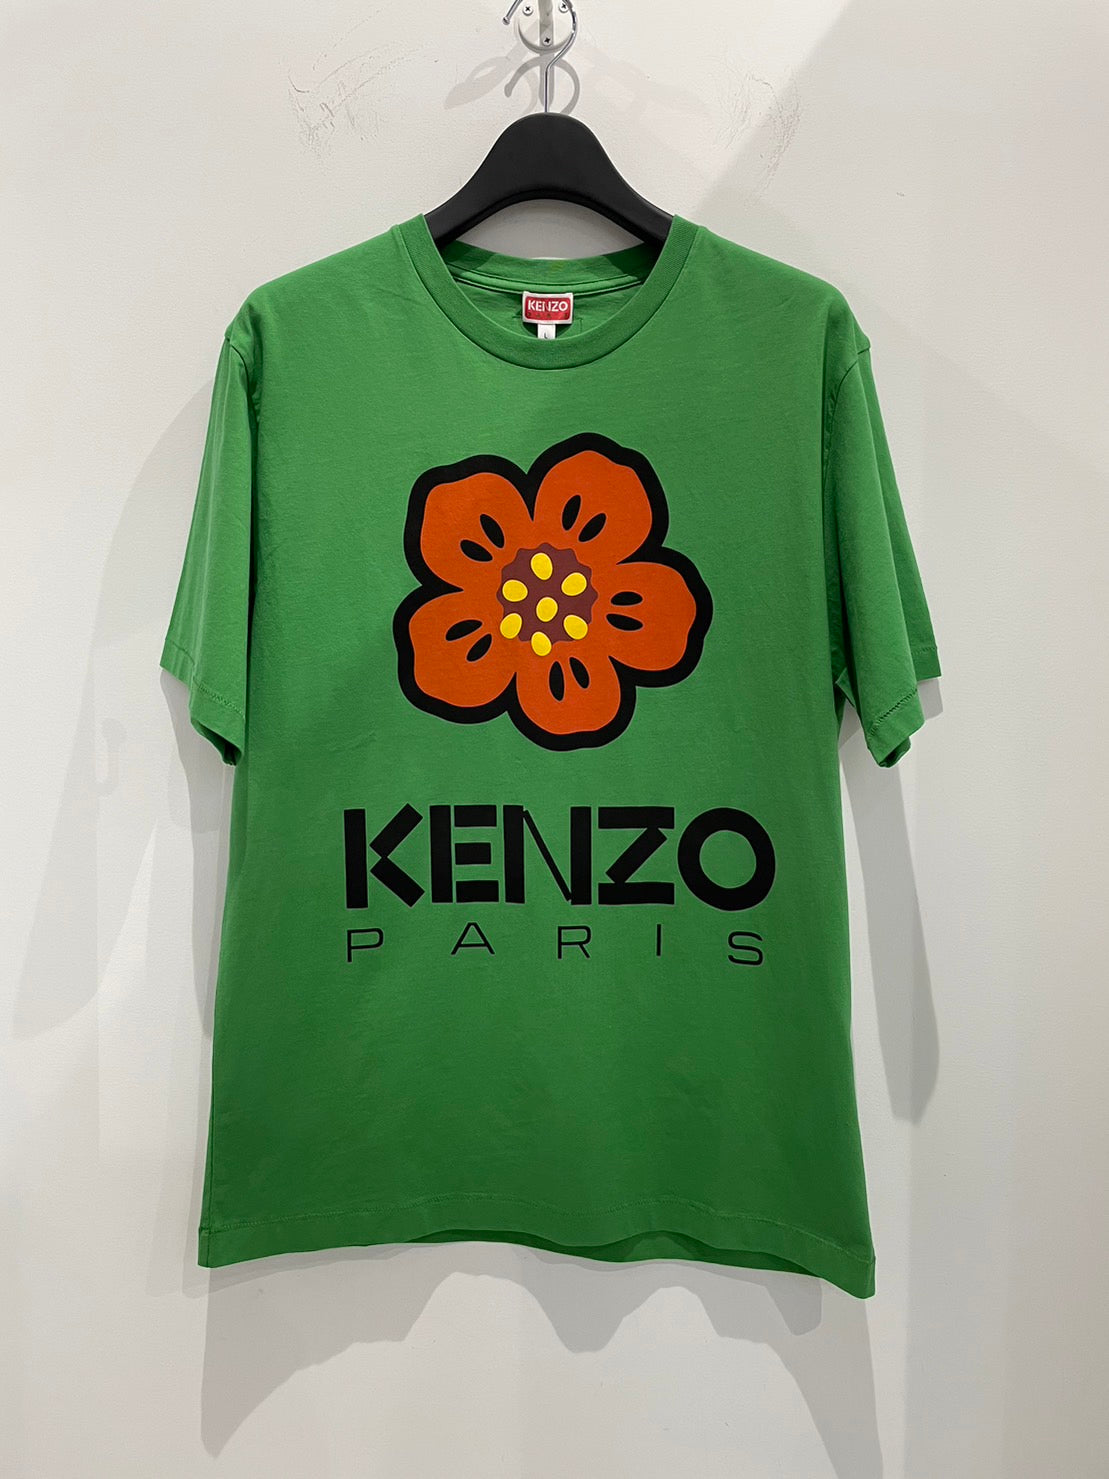 KENZO/ケンゾー Tシャツ グリーン(緑)